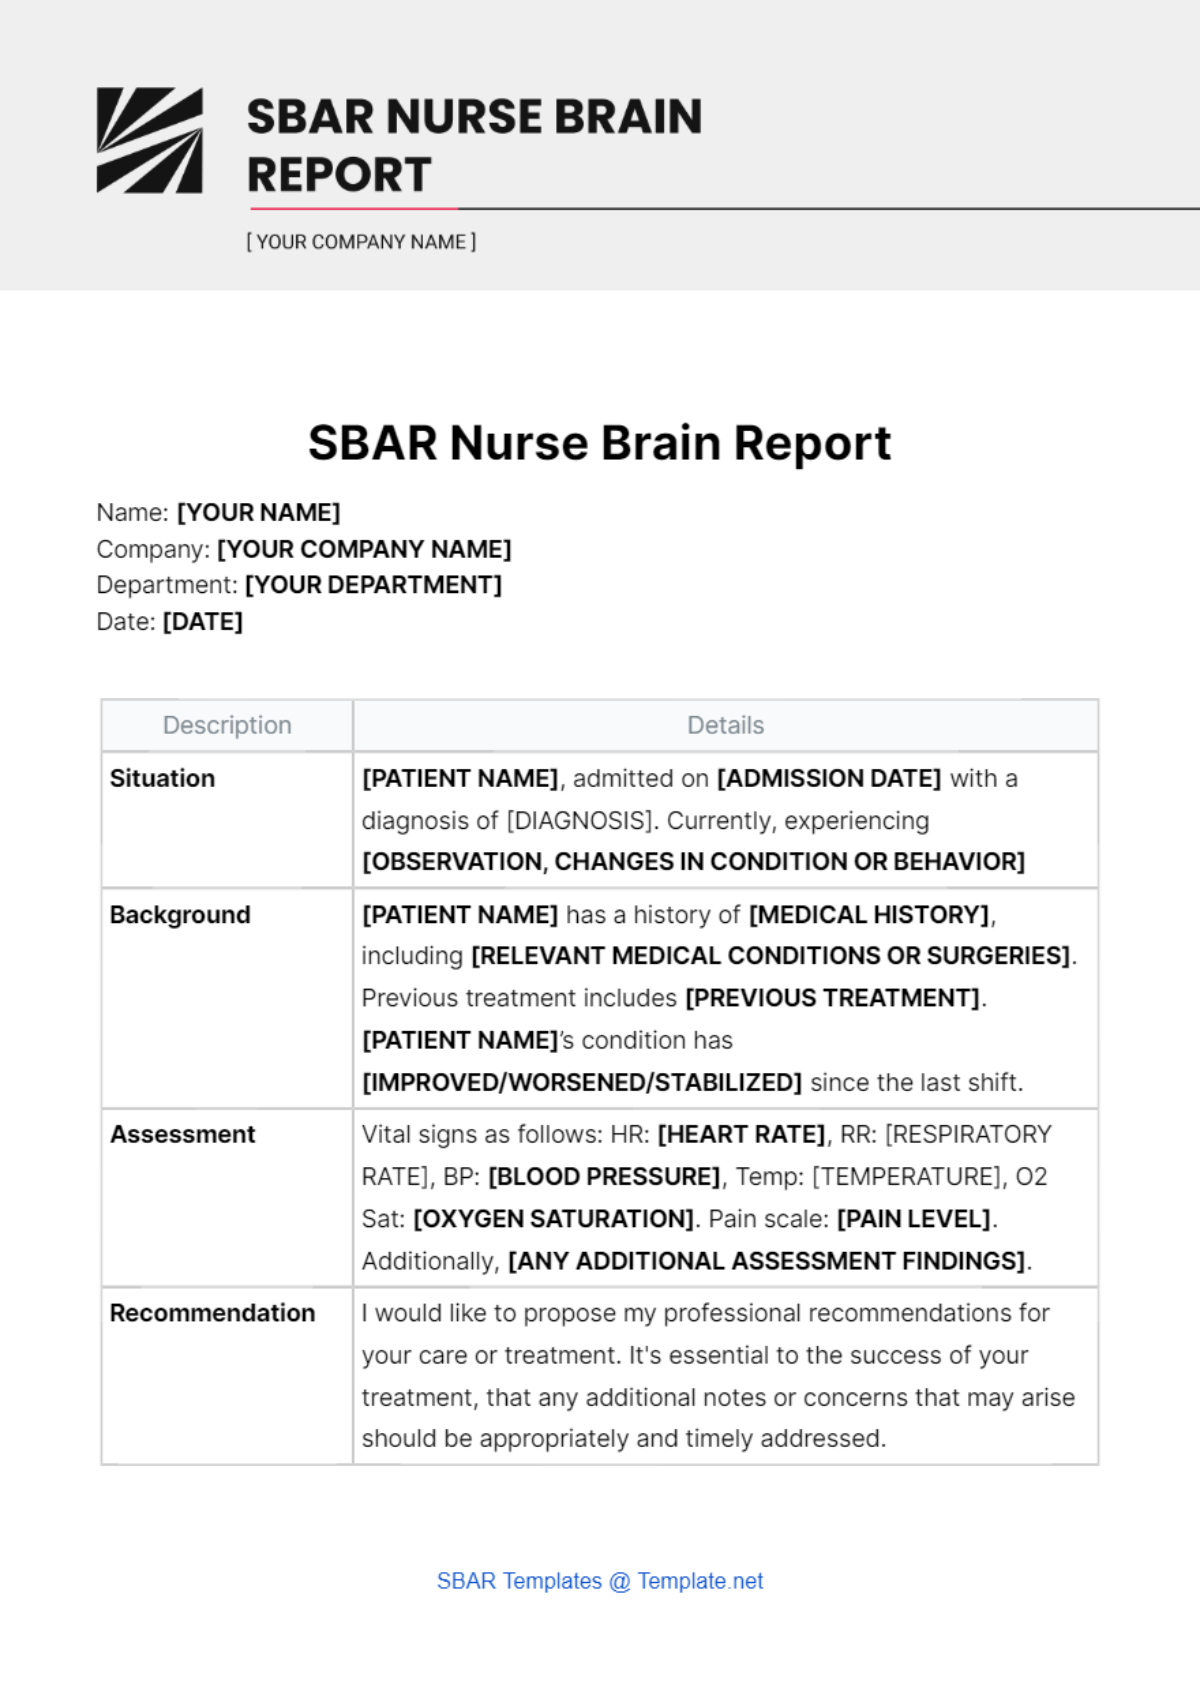 Free SBAR Nurse Brain Report Template